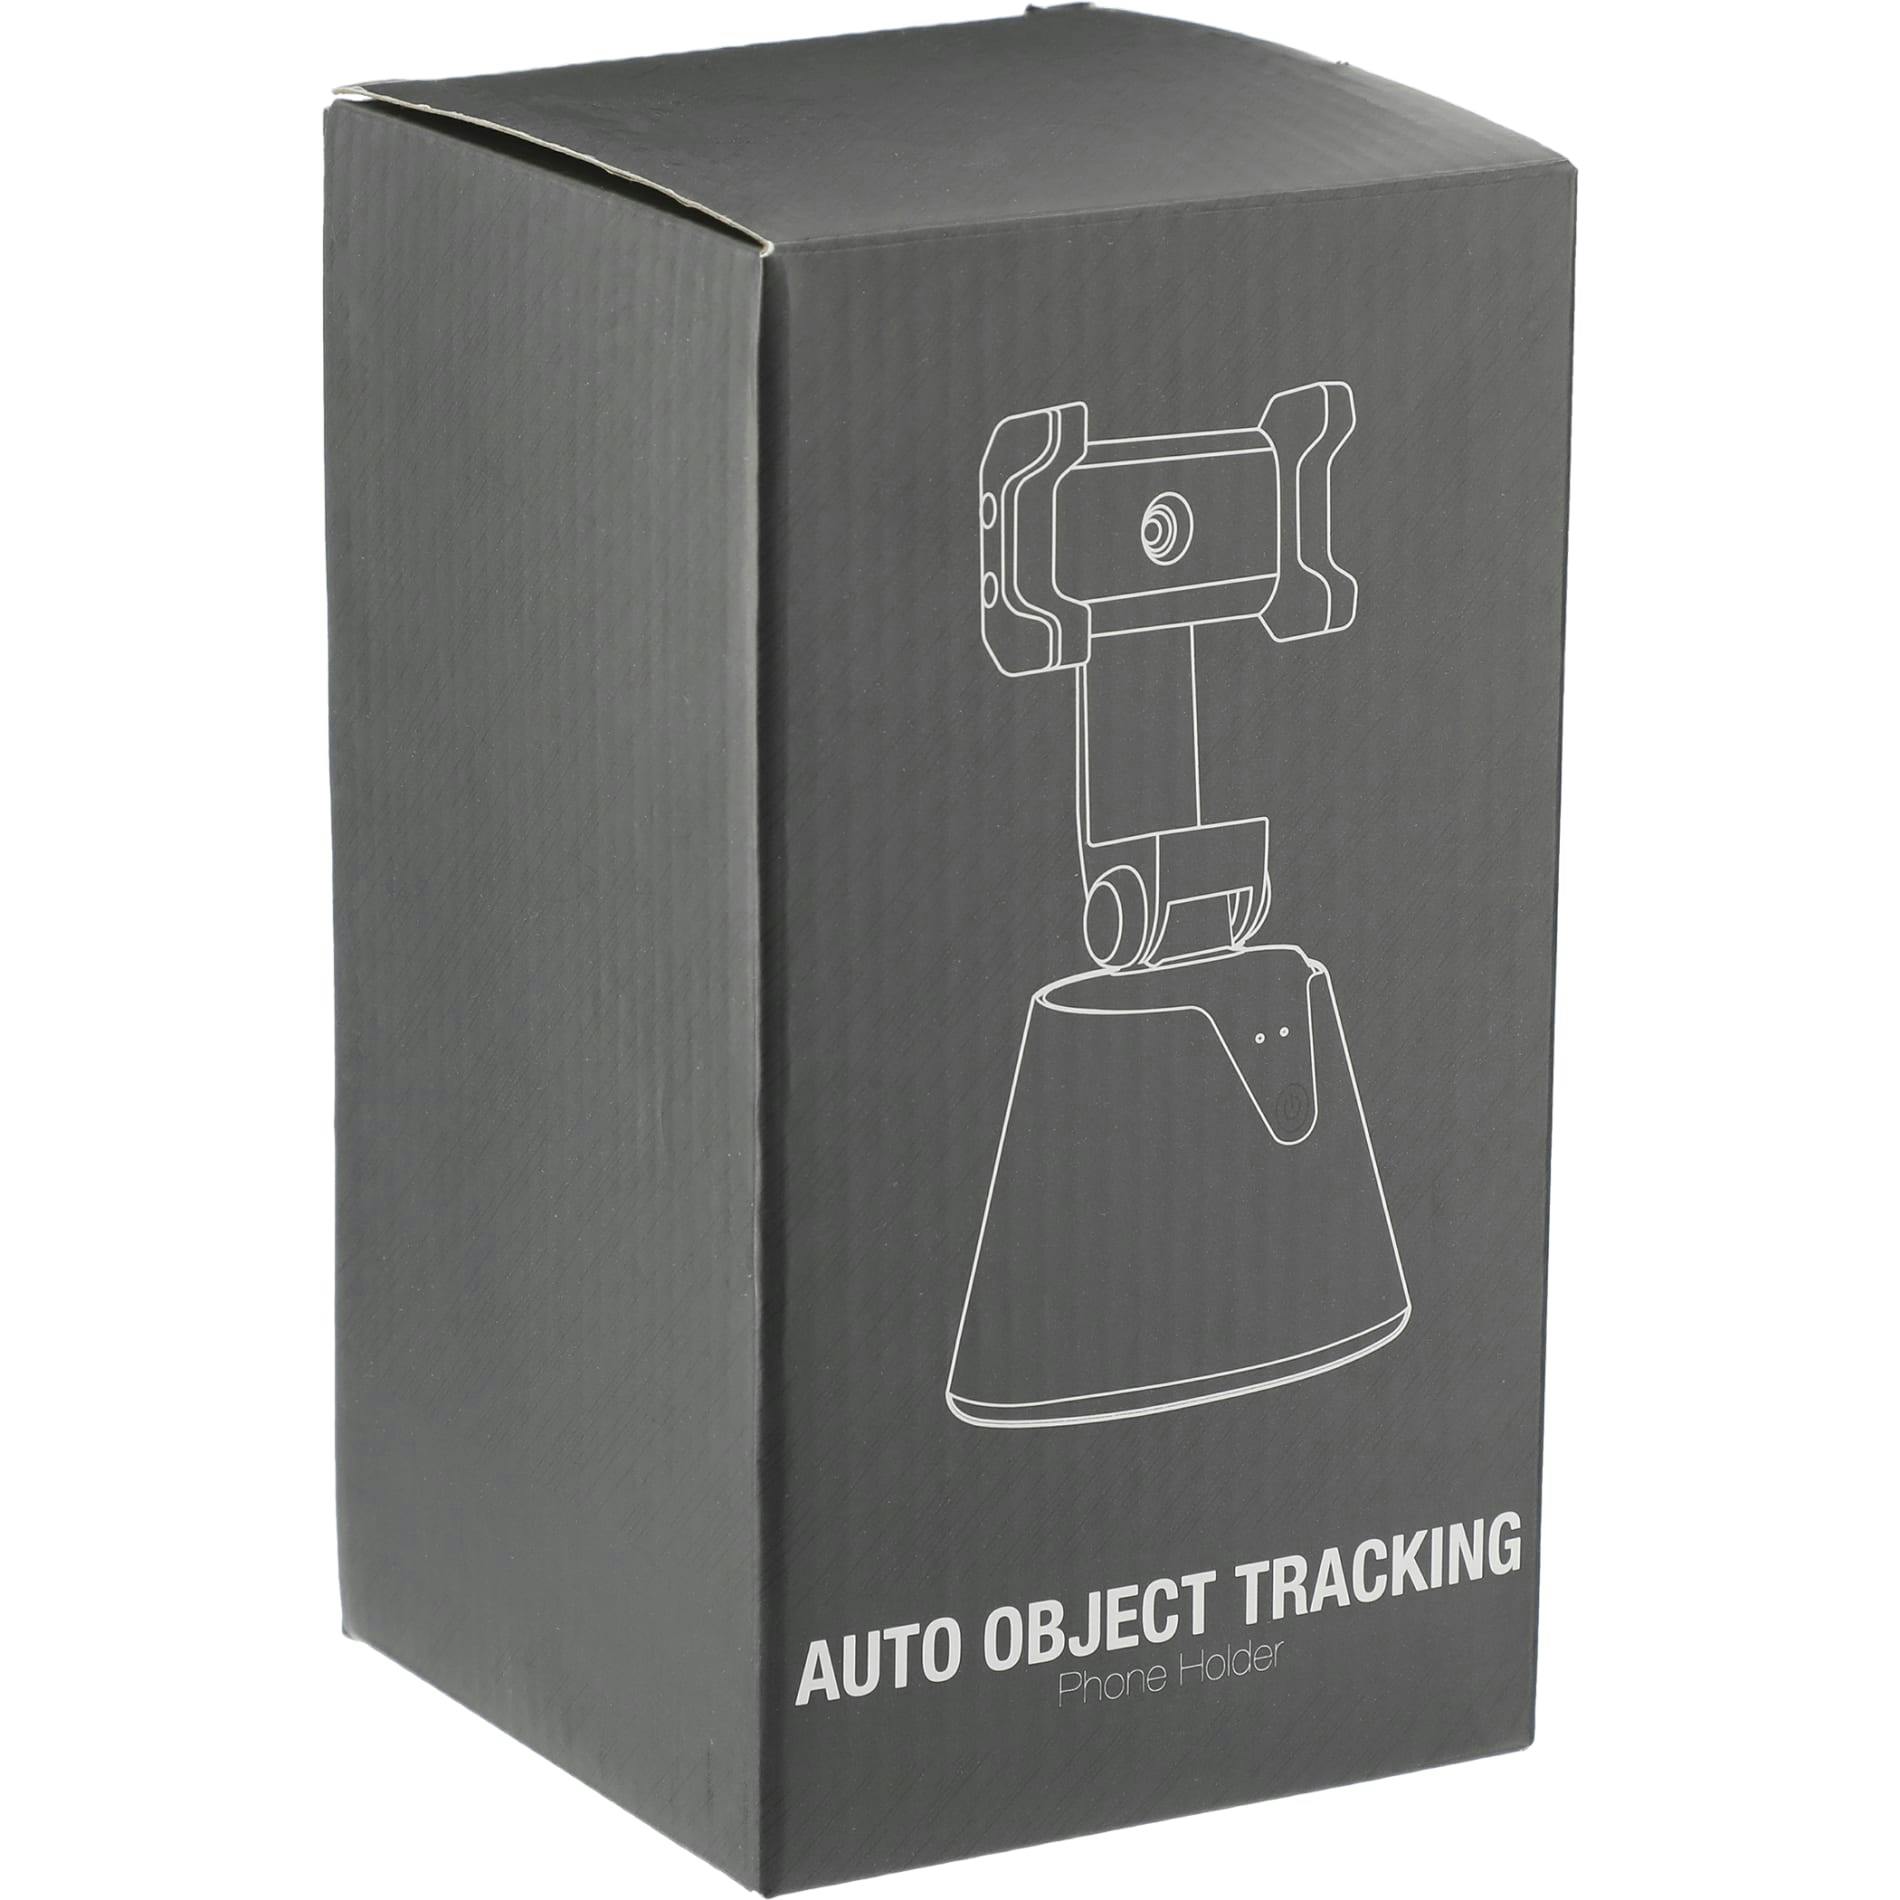 Auto Object Tracking Phone Holder - additional Image 2